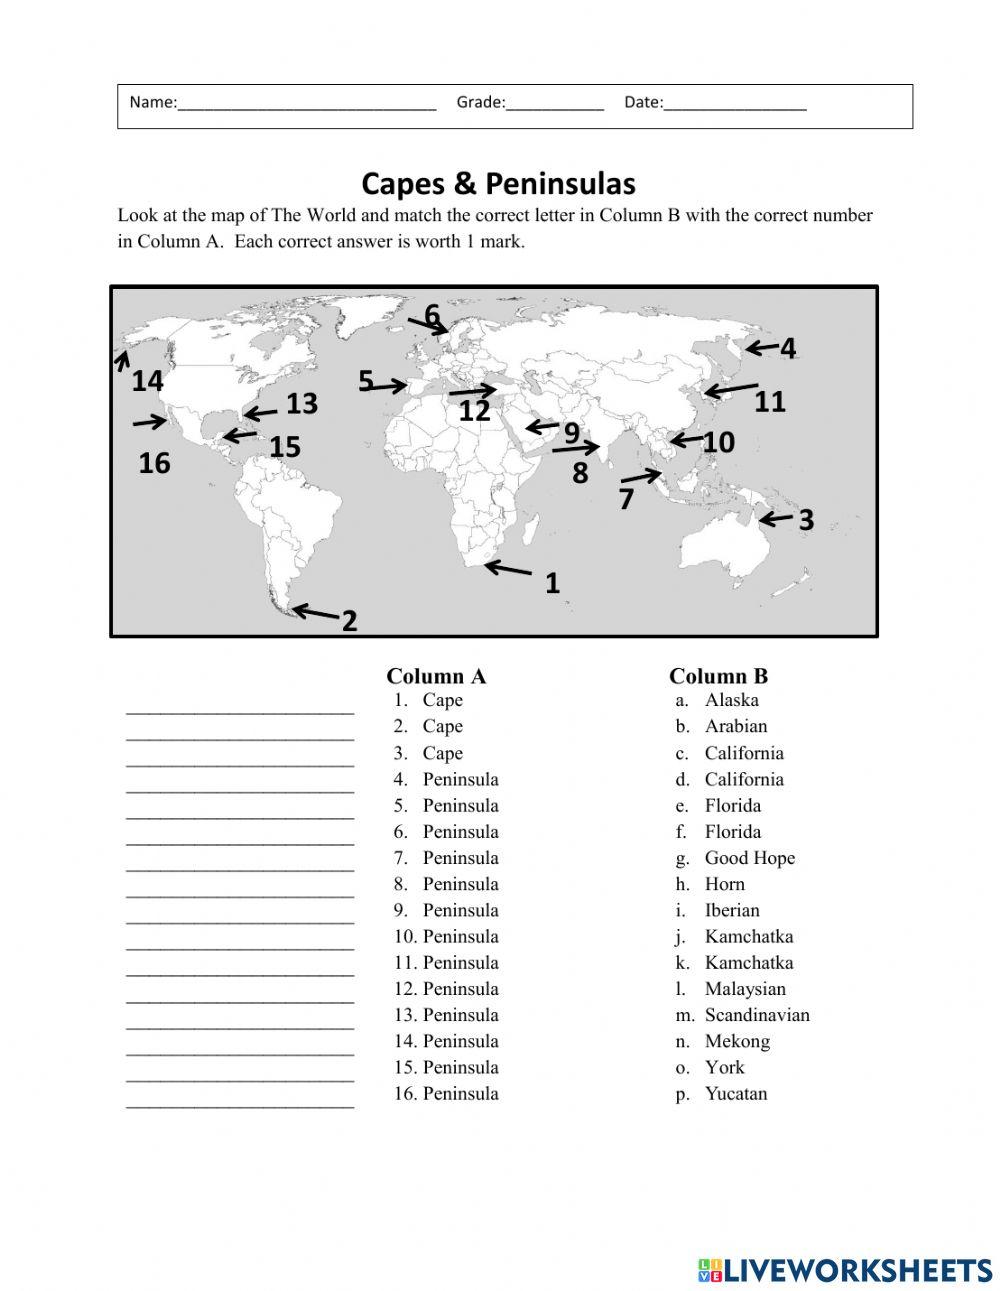 Capes & Peninsulas Worksheet